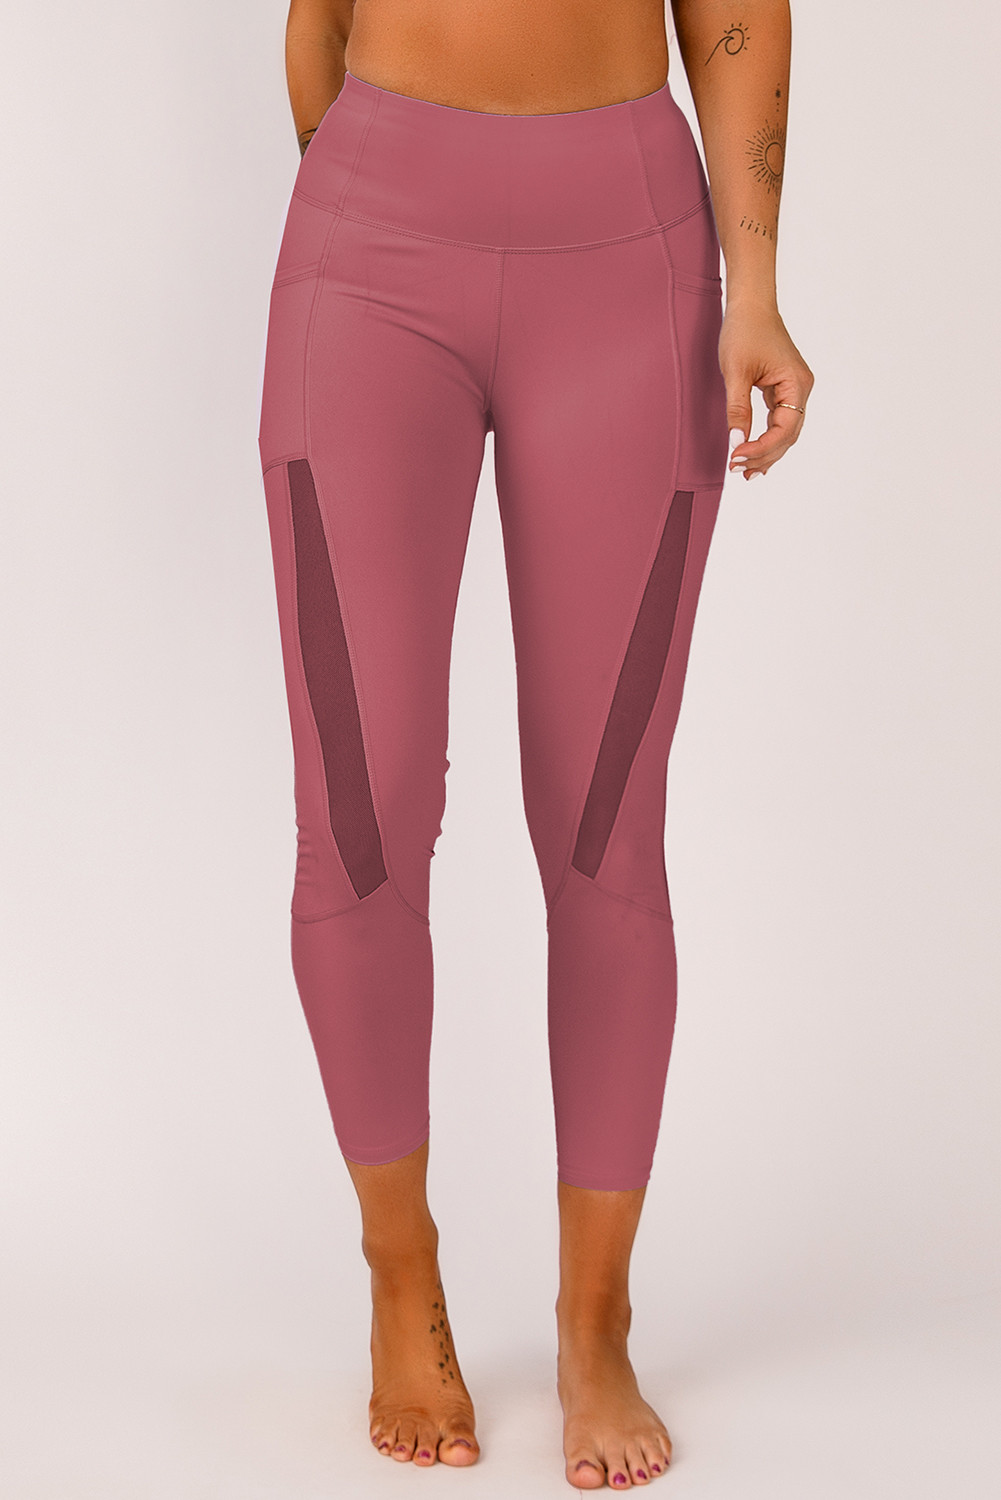 https://selectafashion.com/84393/mesh-side-splicing-high-waist-yoga-sports-leggings-with-phone-pocket.jpg